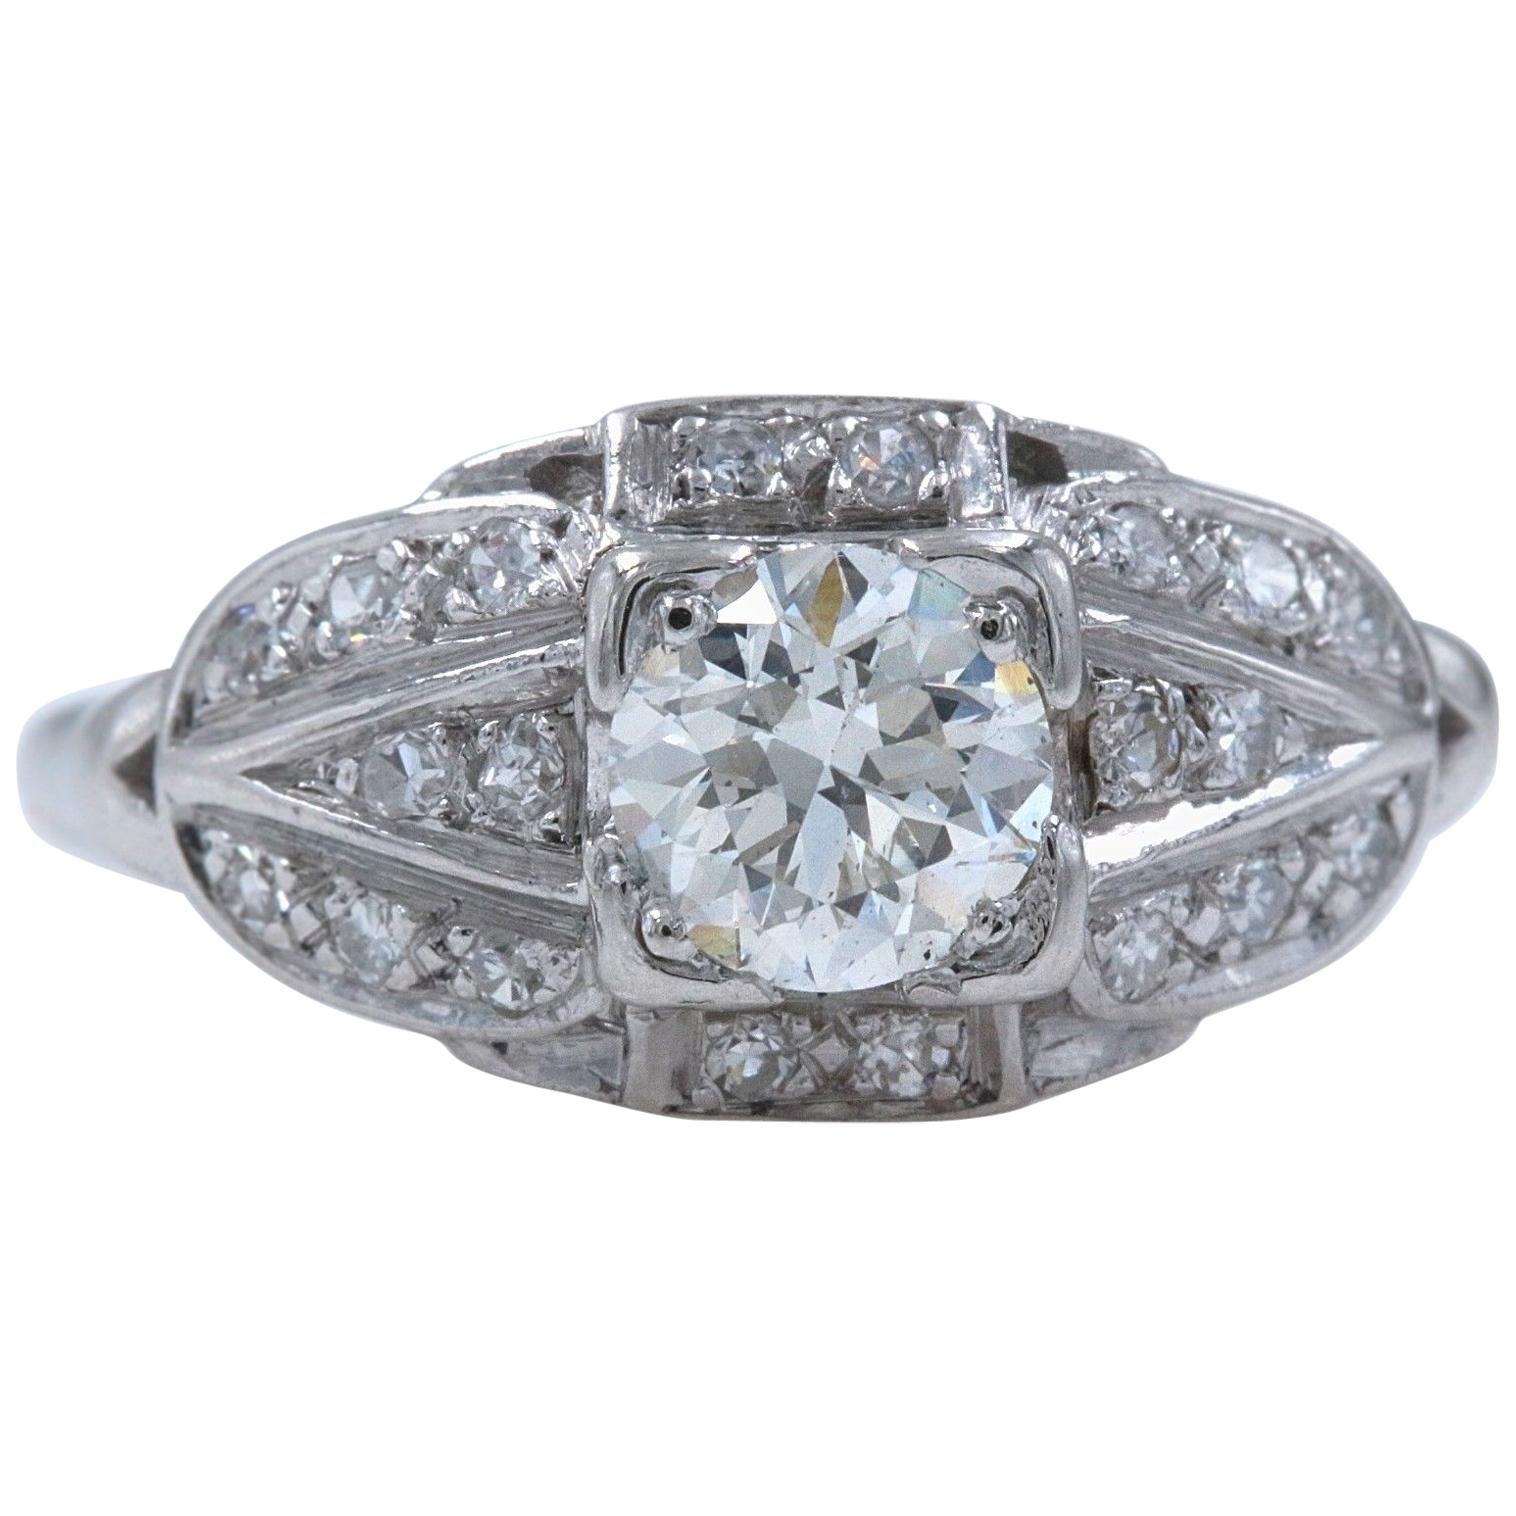 Vintage Platinum Diamond Engagement Ring Old Cuts 1.08 Carat